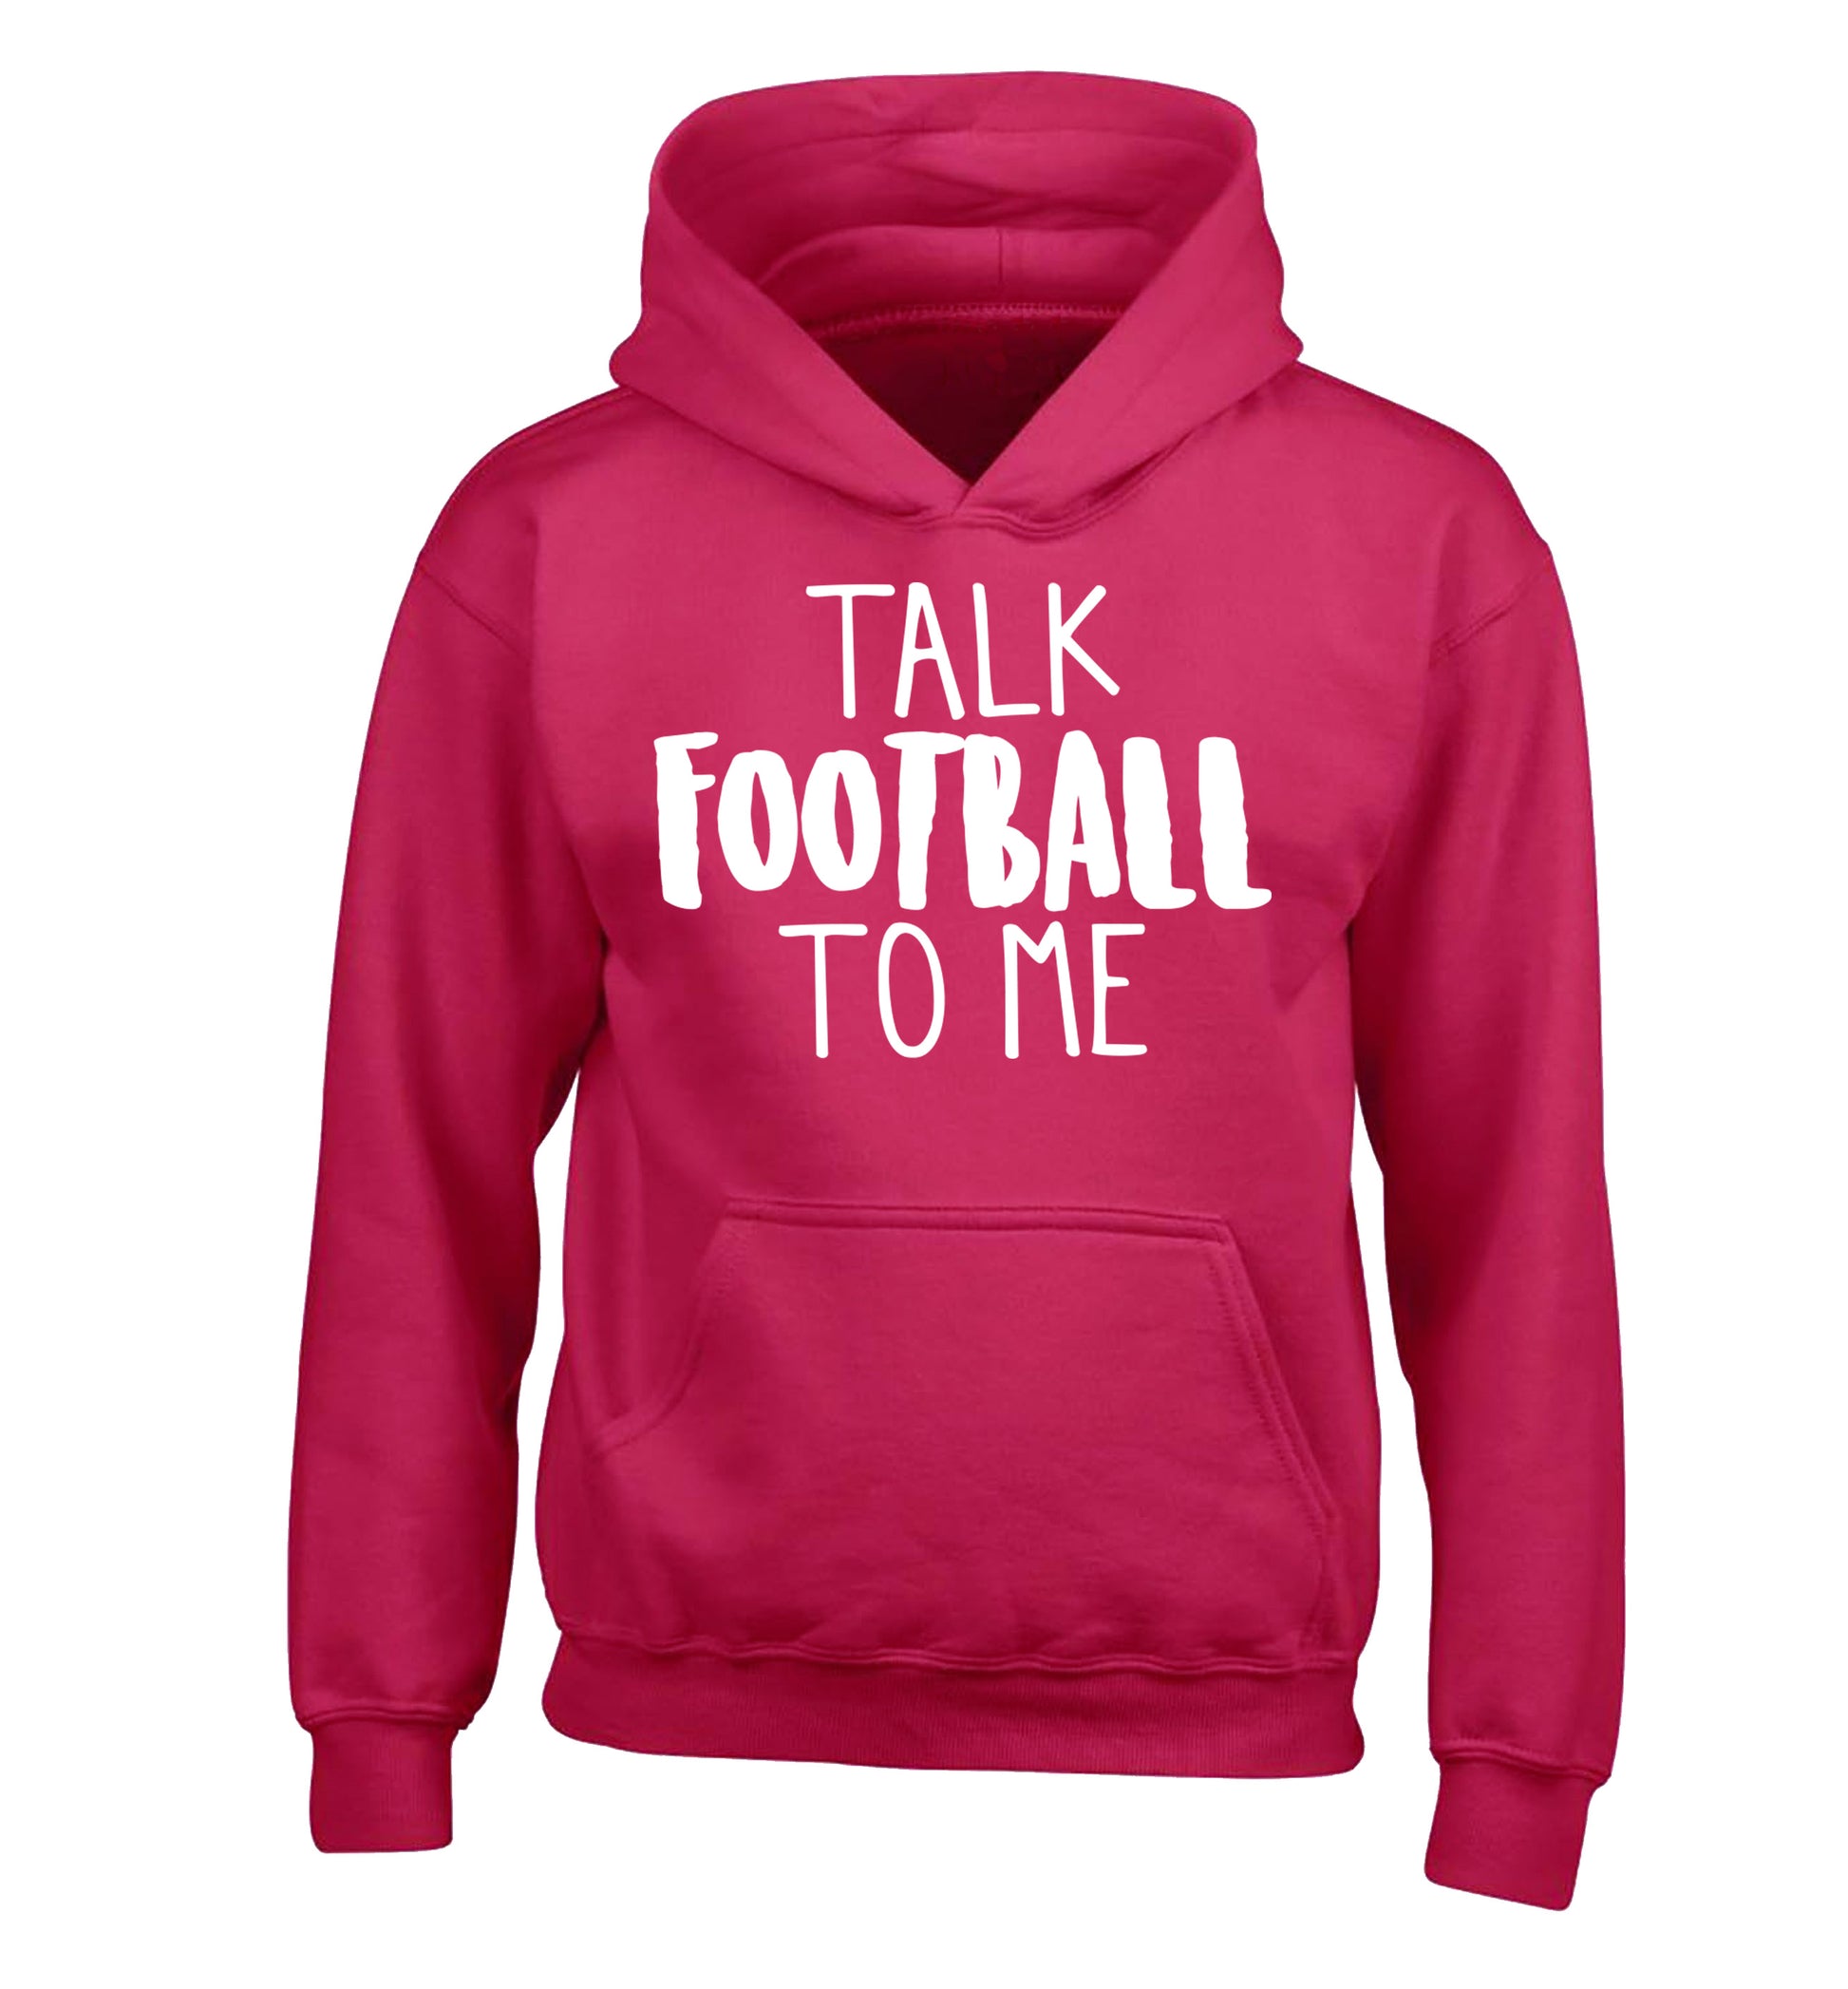 Talk football to me children's pink hoodie 12-14 Years